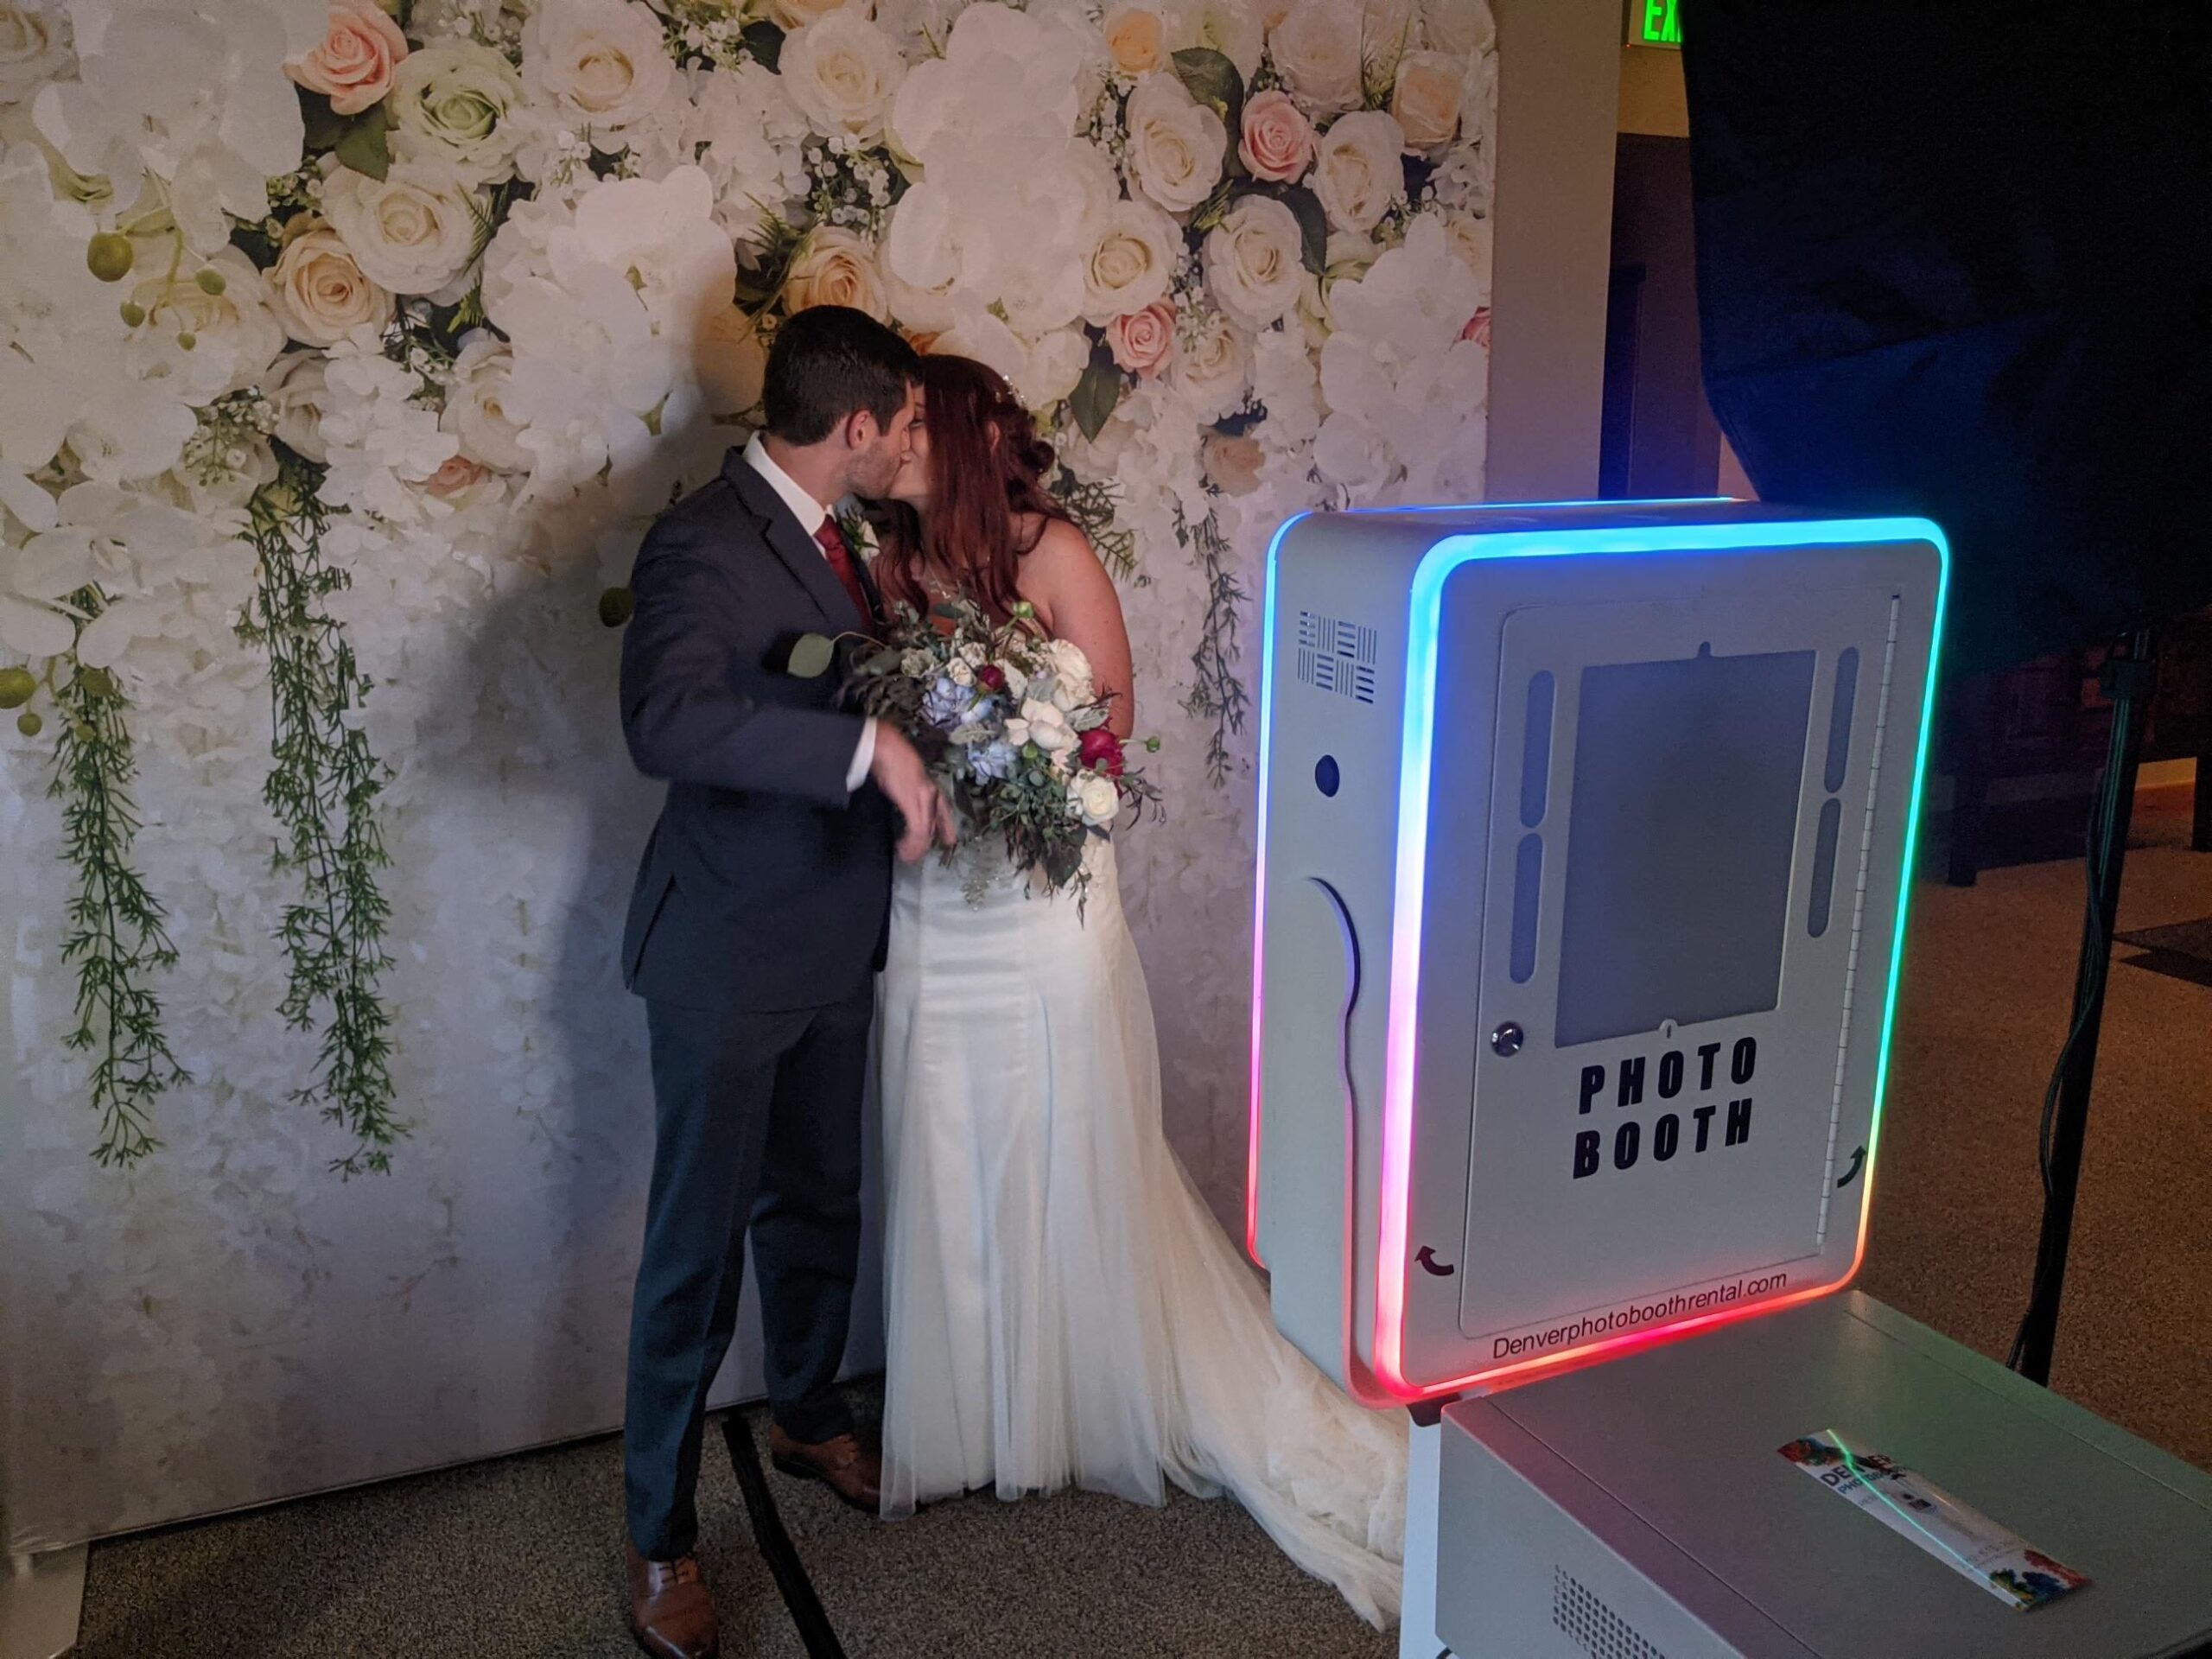 Wedding photo booth set up